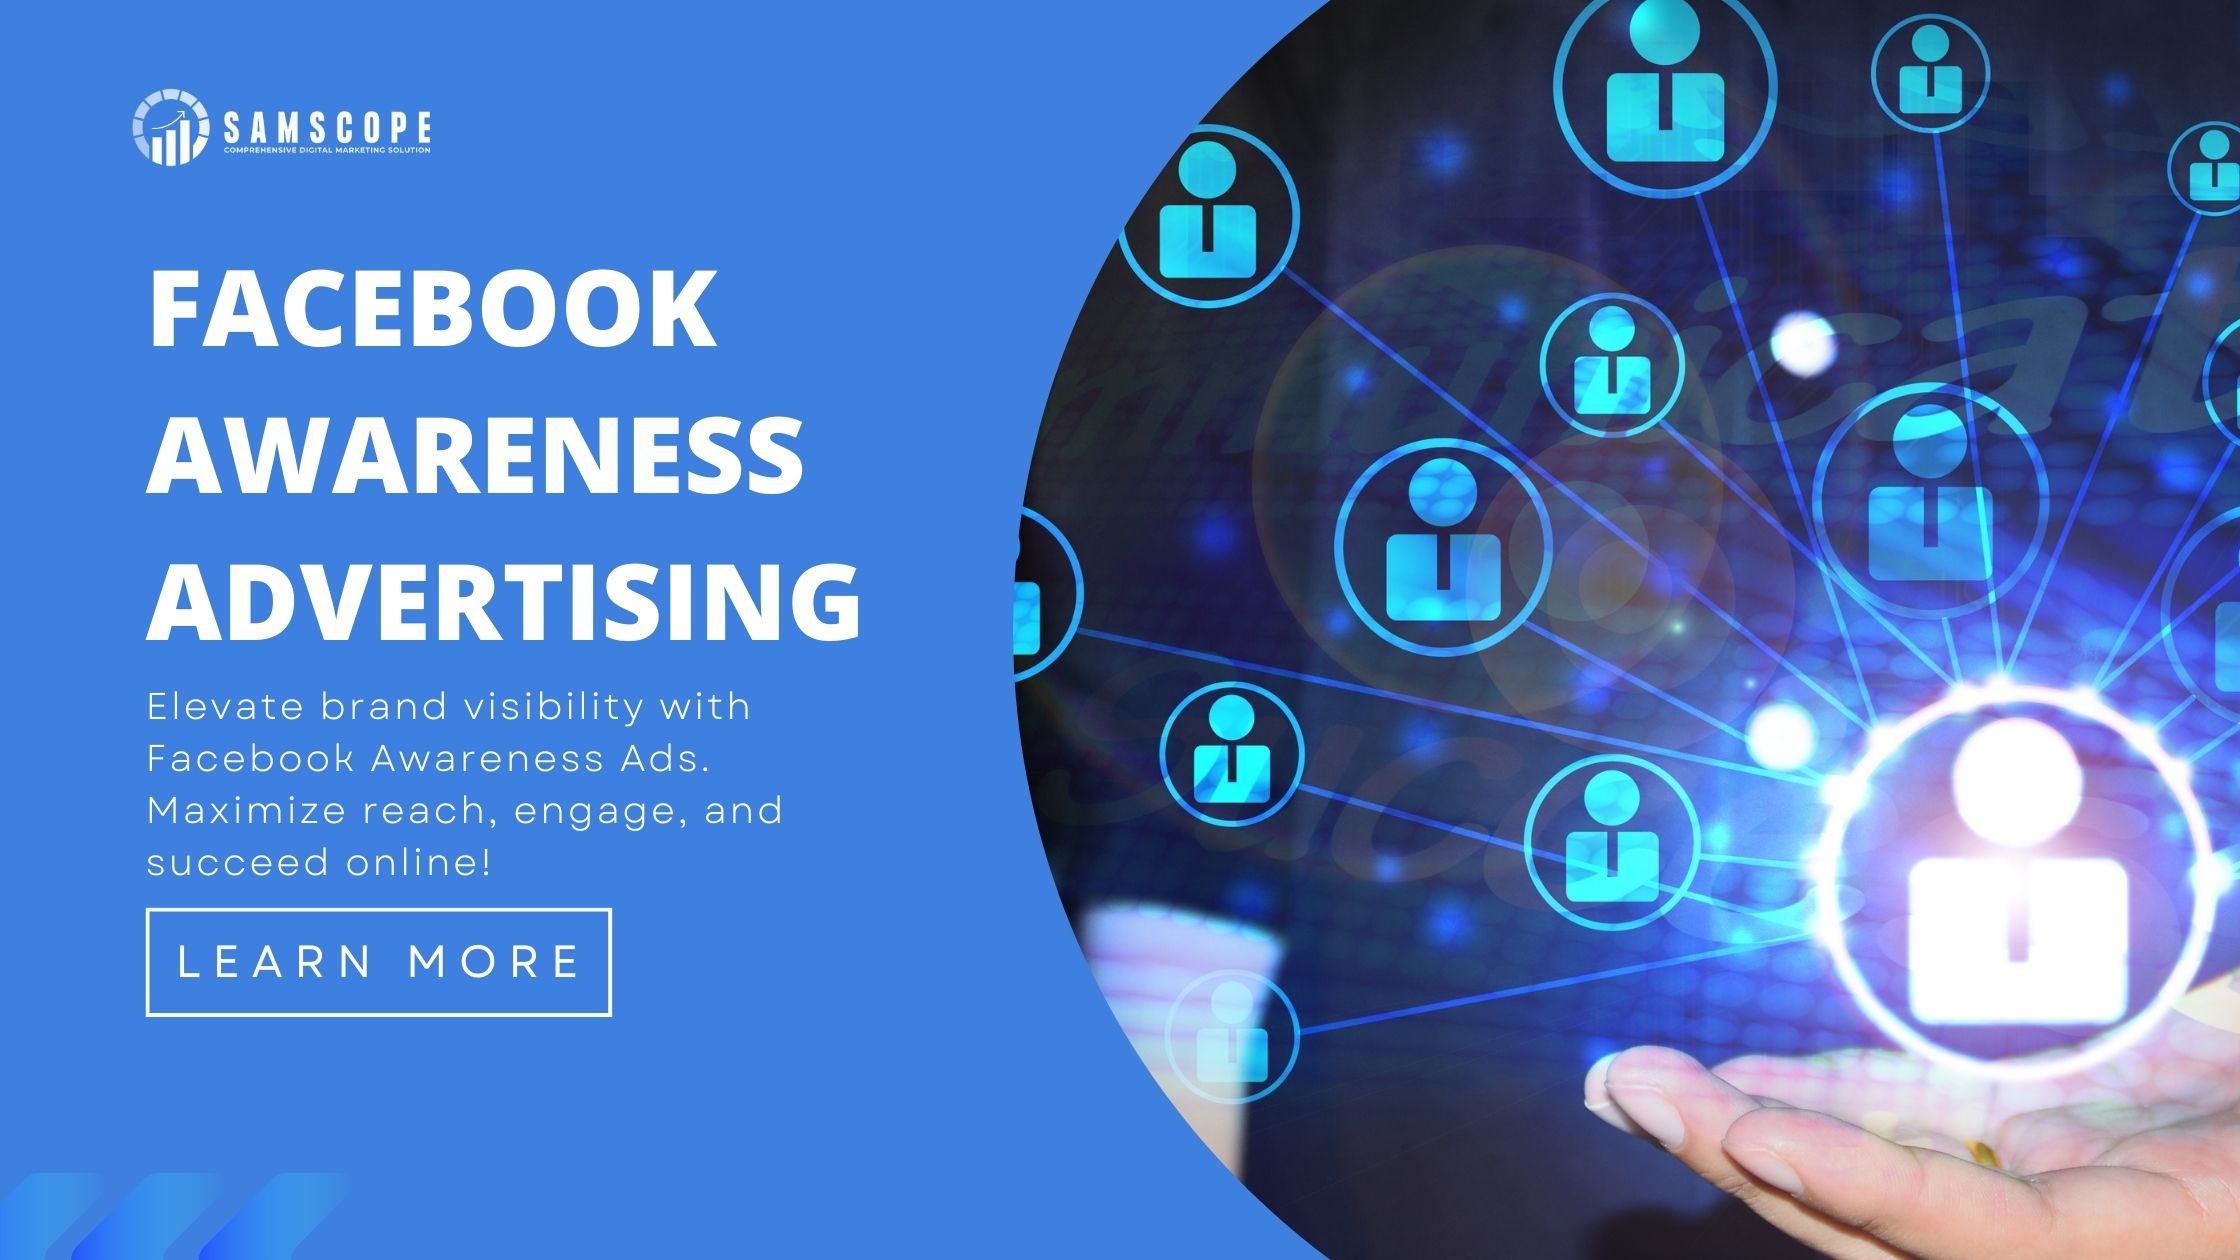 Facebook Awareness Advertising Empowers Brands